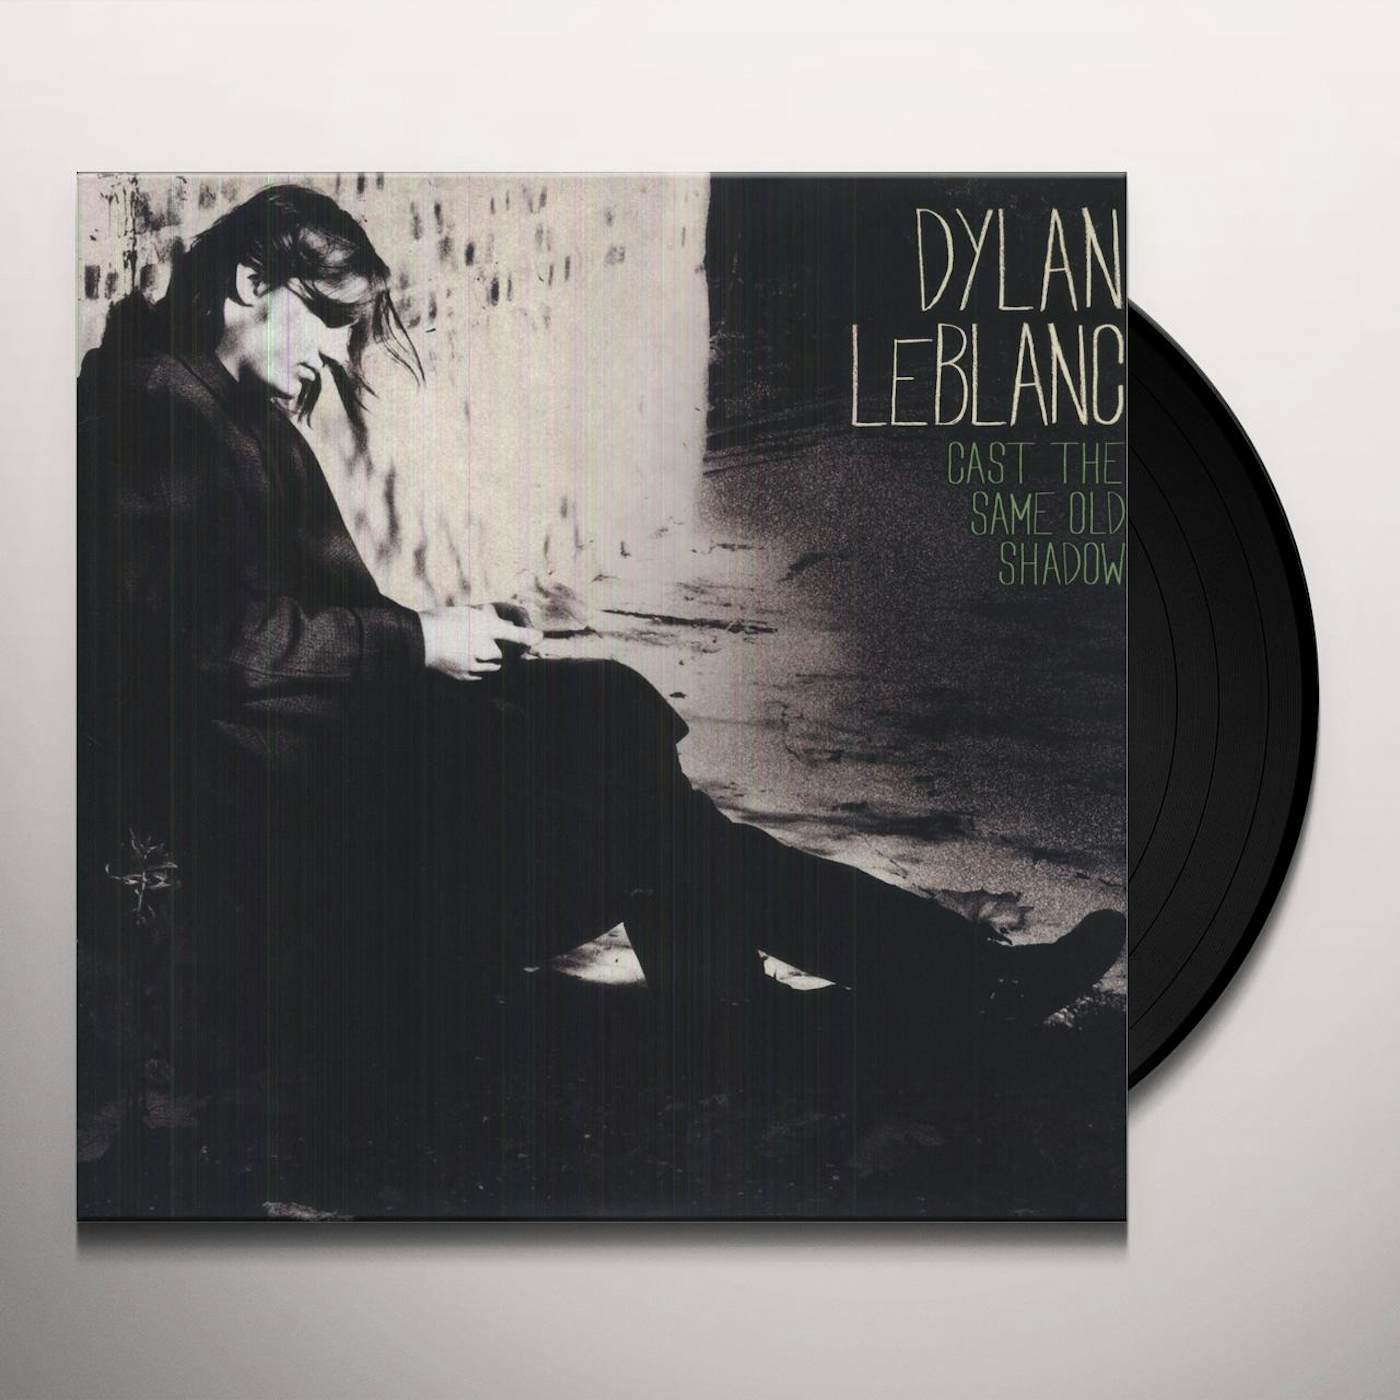 Dylan LeBlanc Cast The Same Old Shadow Vinyl Record